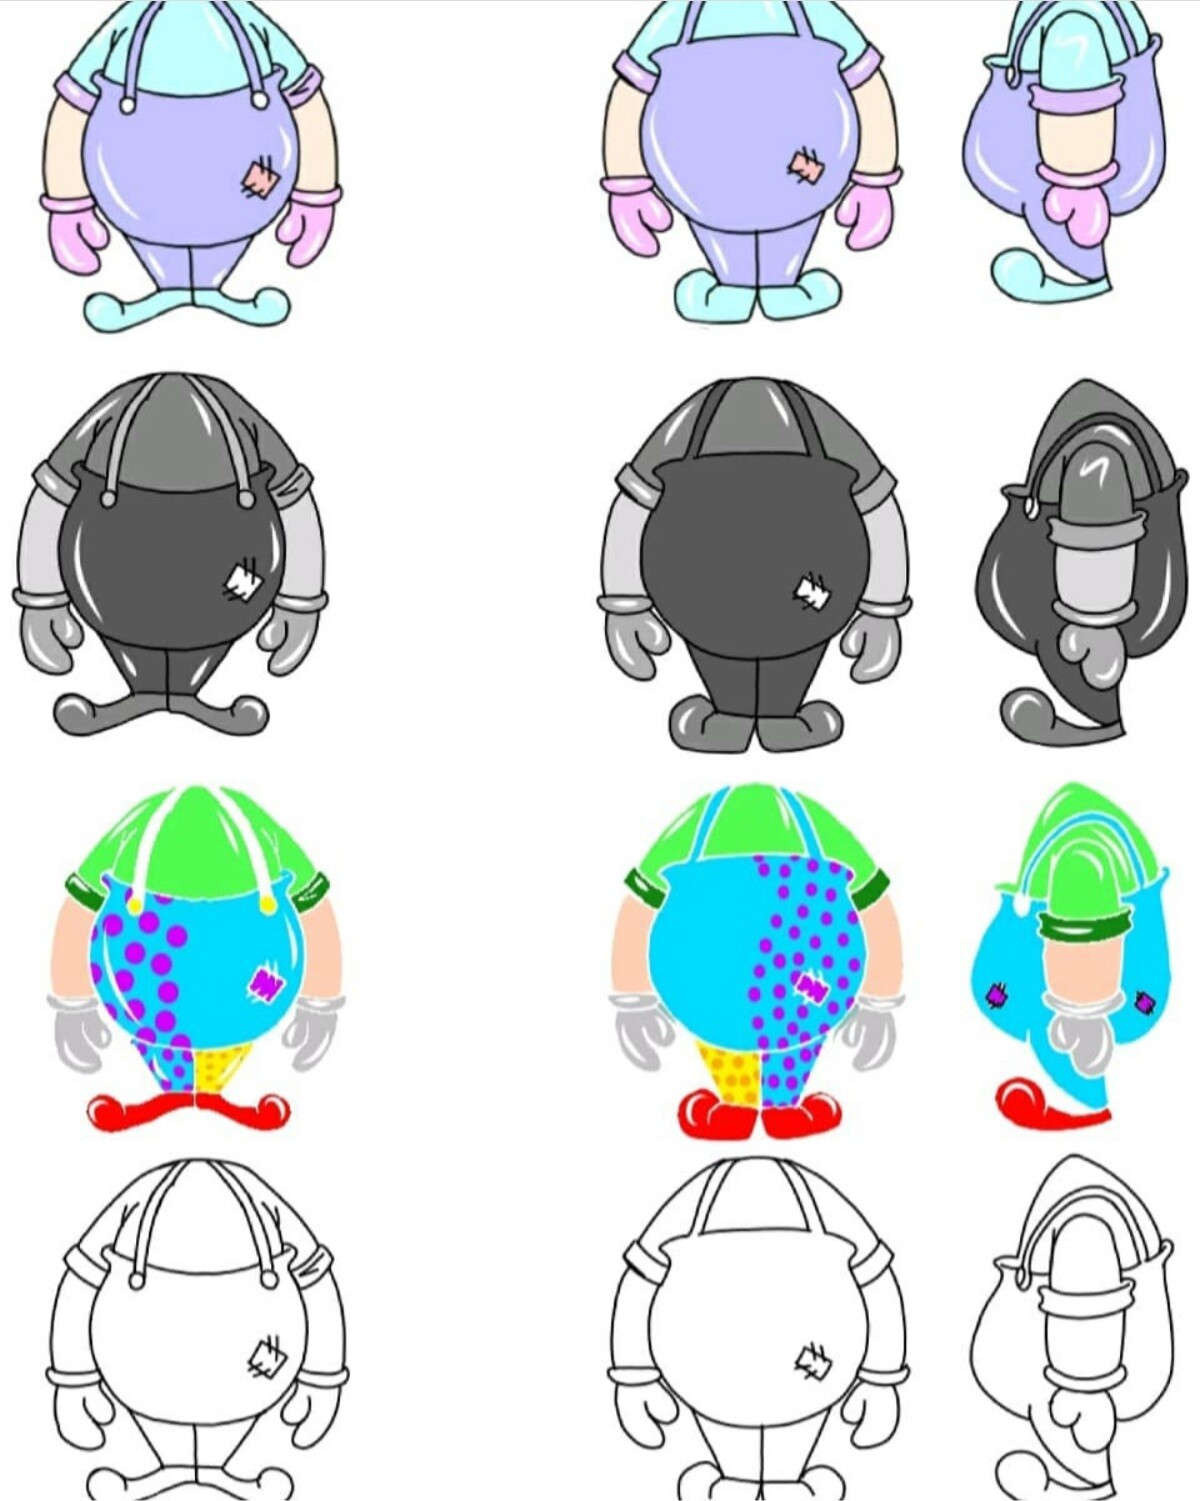 ArtStation - Character design,concept,development for 2d animation called  cobblepot